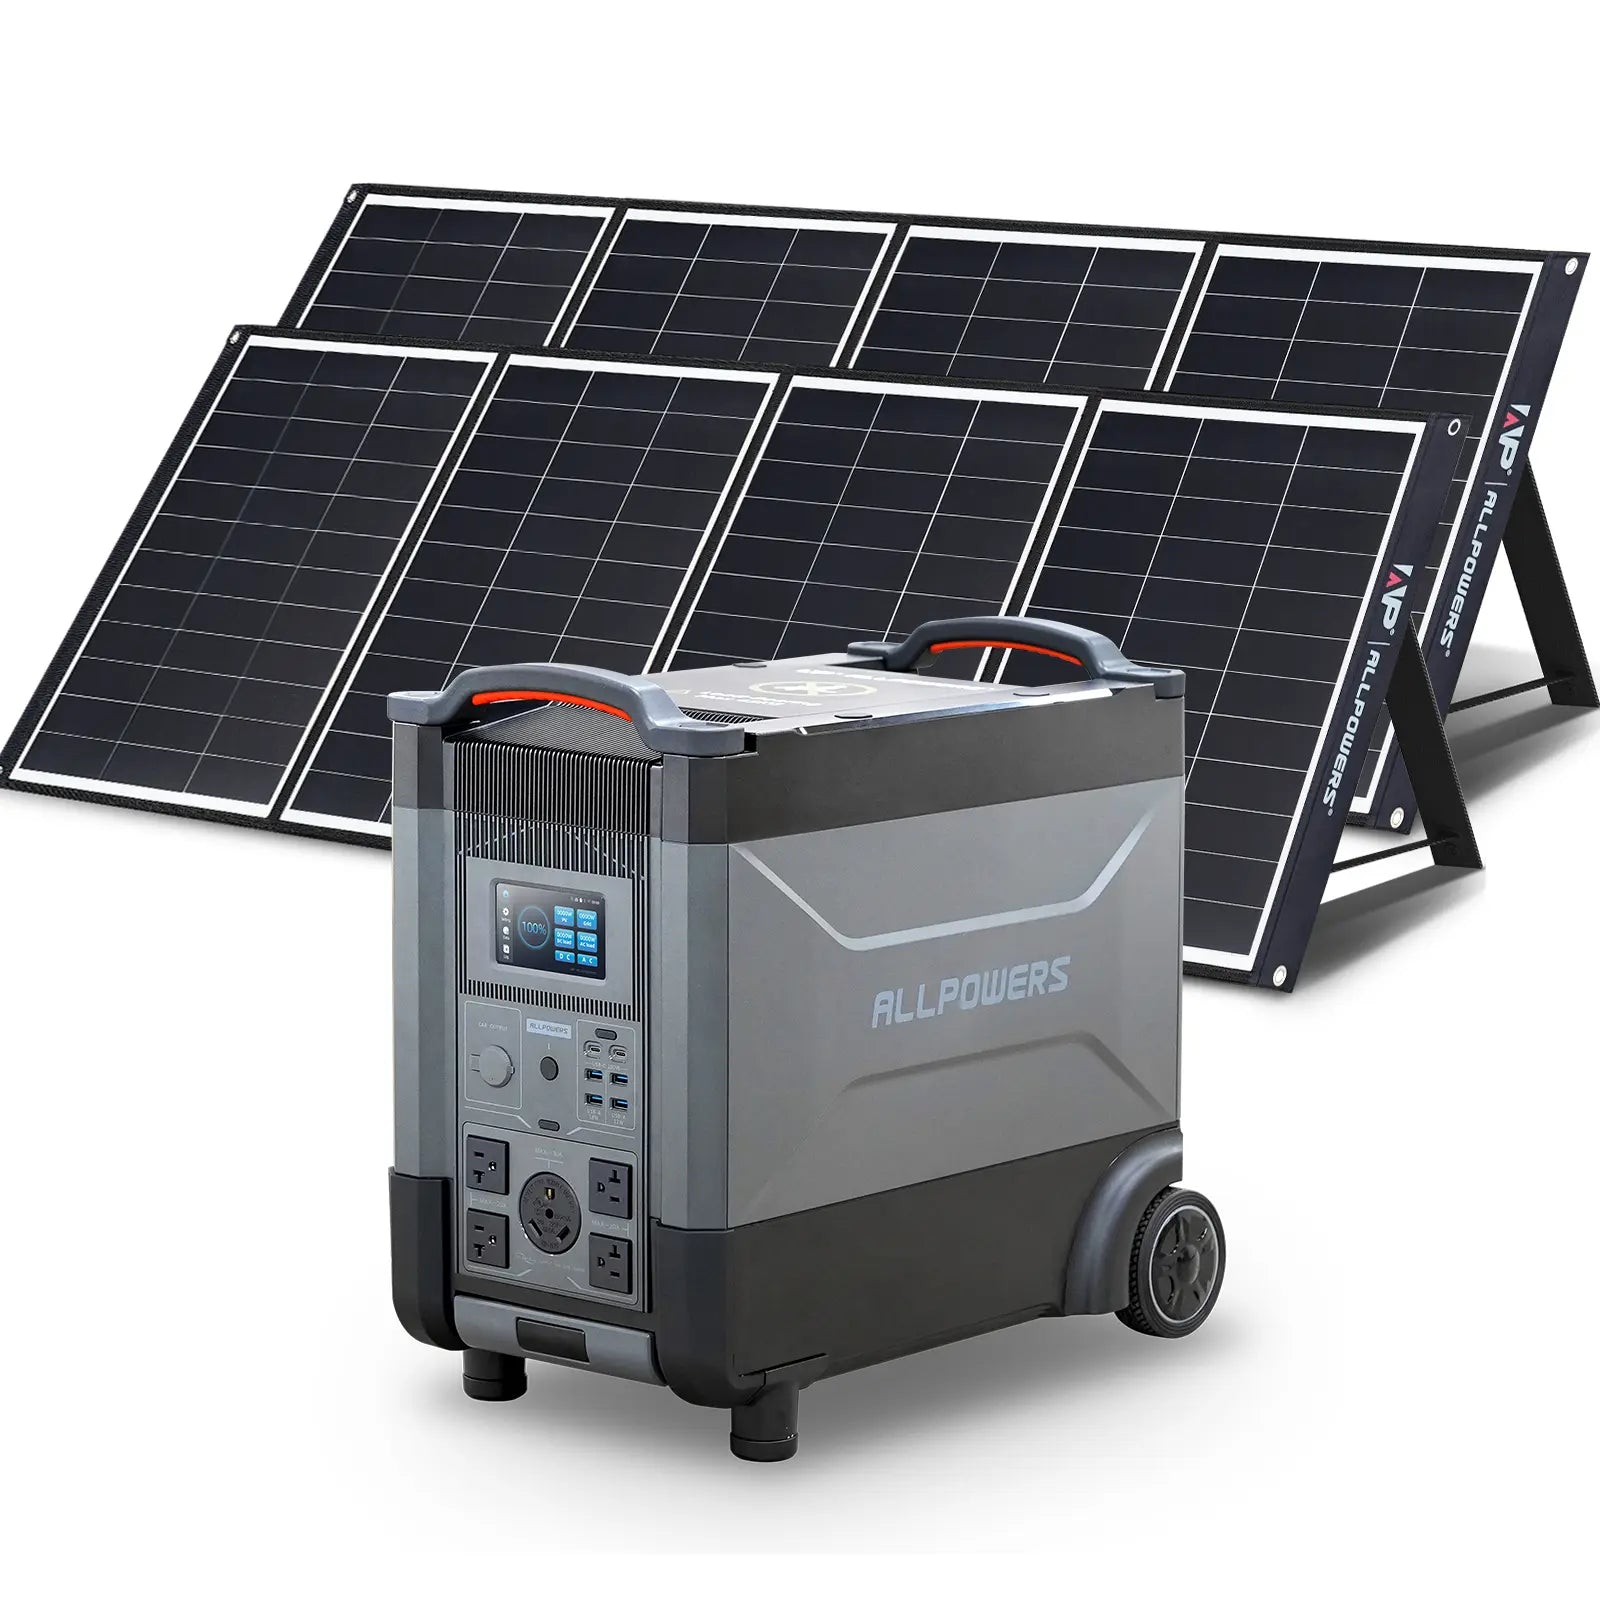 ALLPOWERS Solar Generator Kit 4000W (R4000 + 2 x SP035 200W Solar Panel)